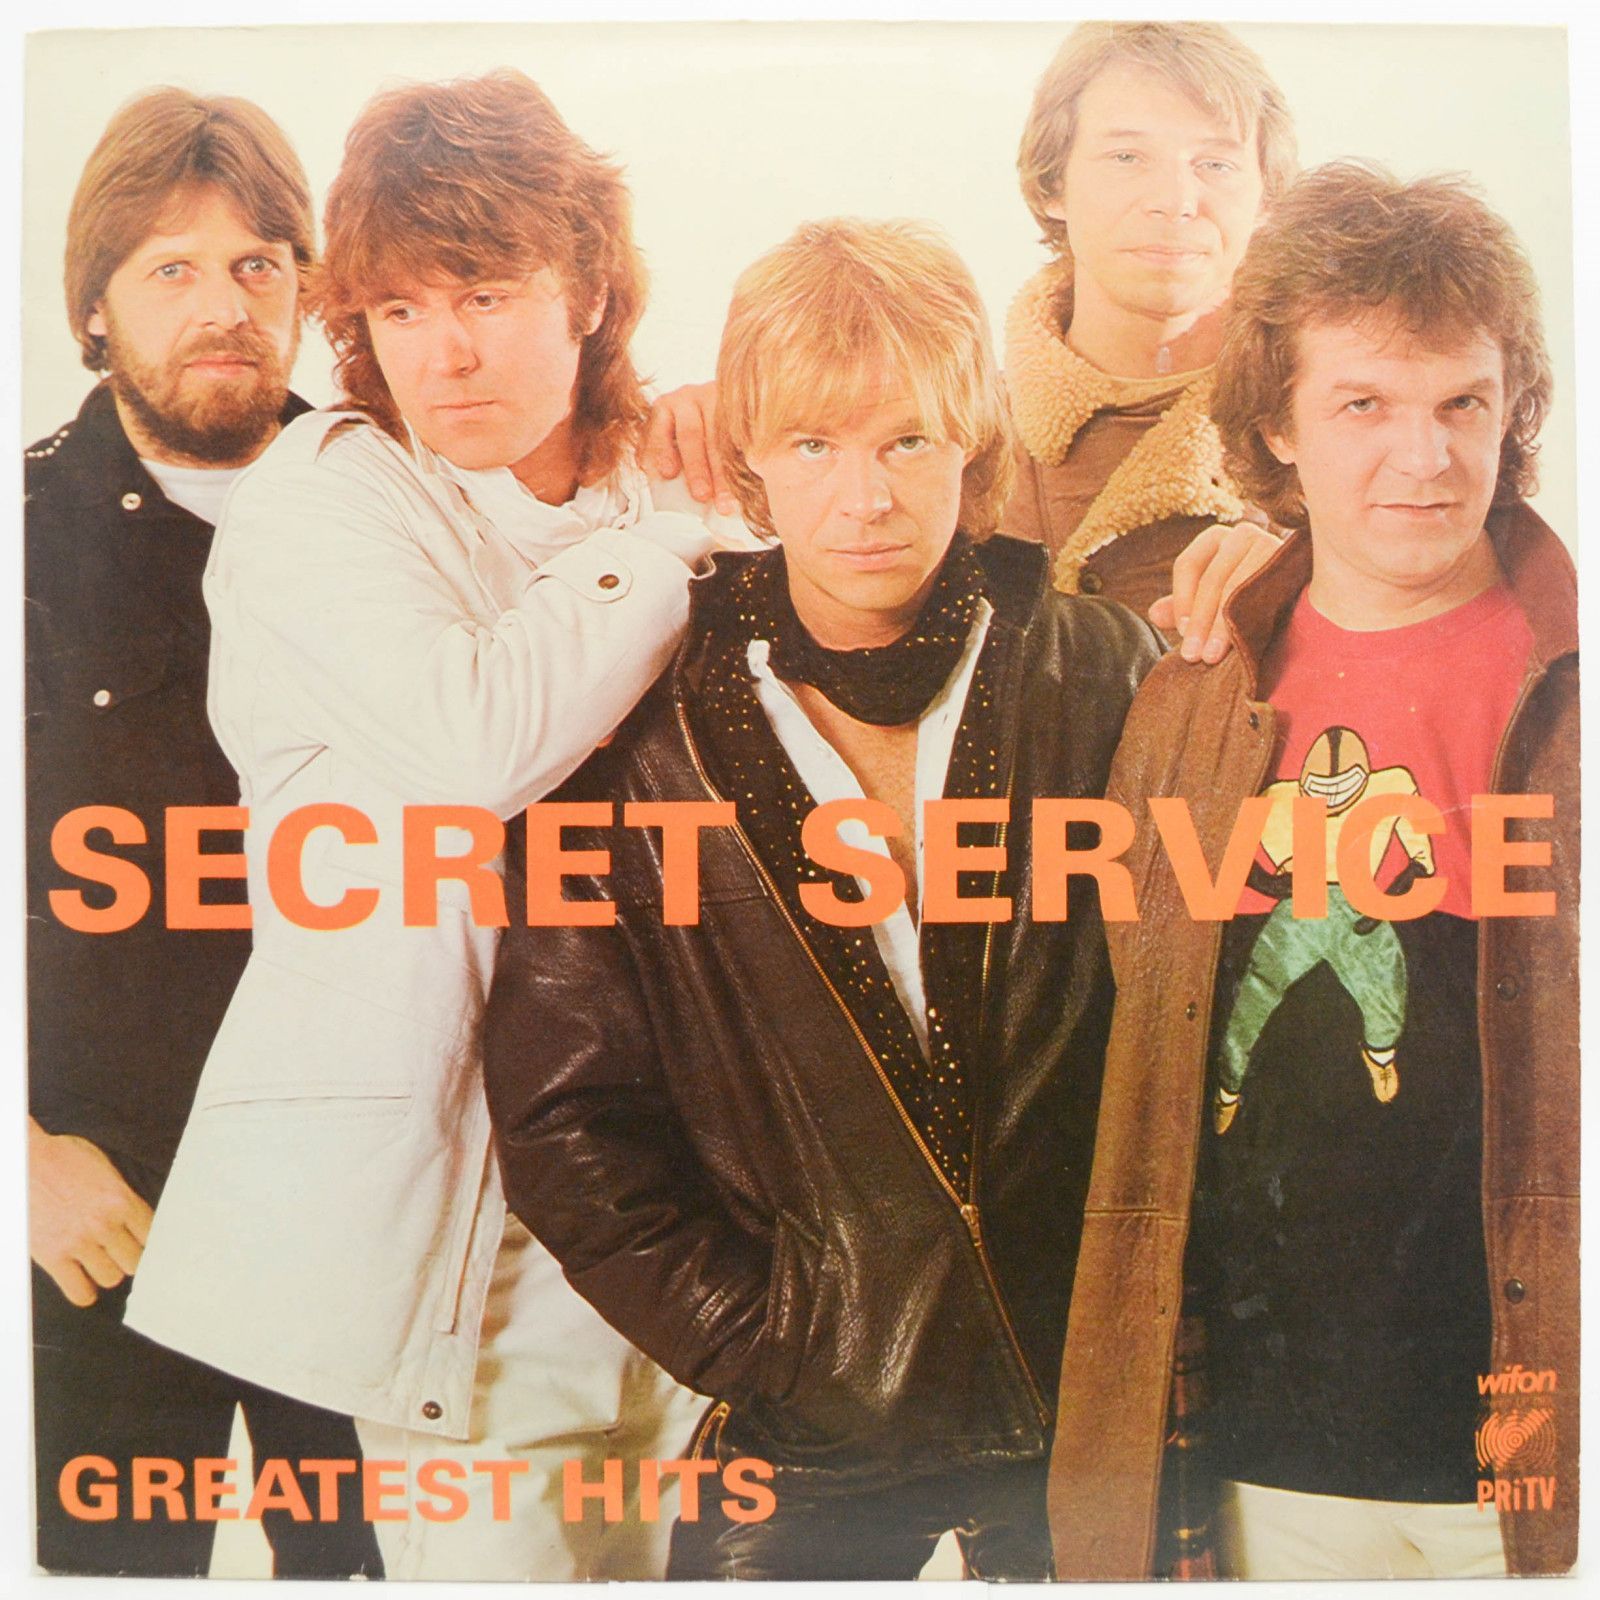 Secret Service — Greatest Hits, 1987